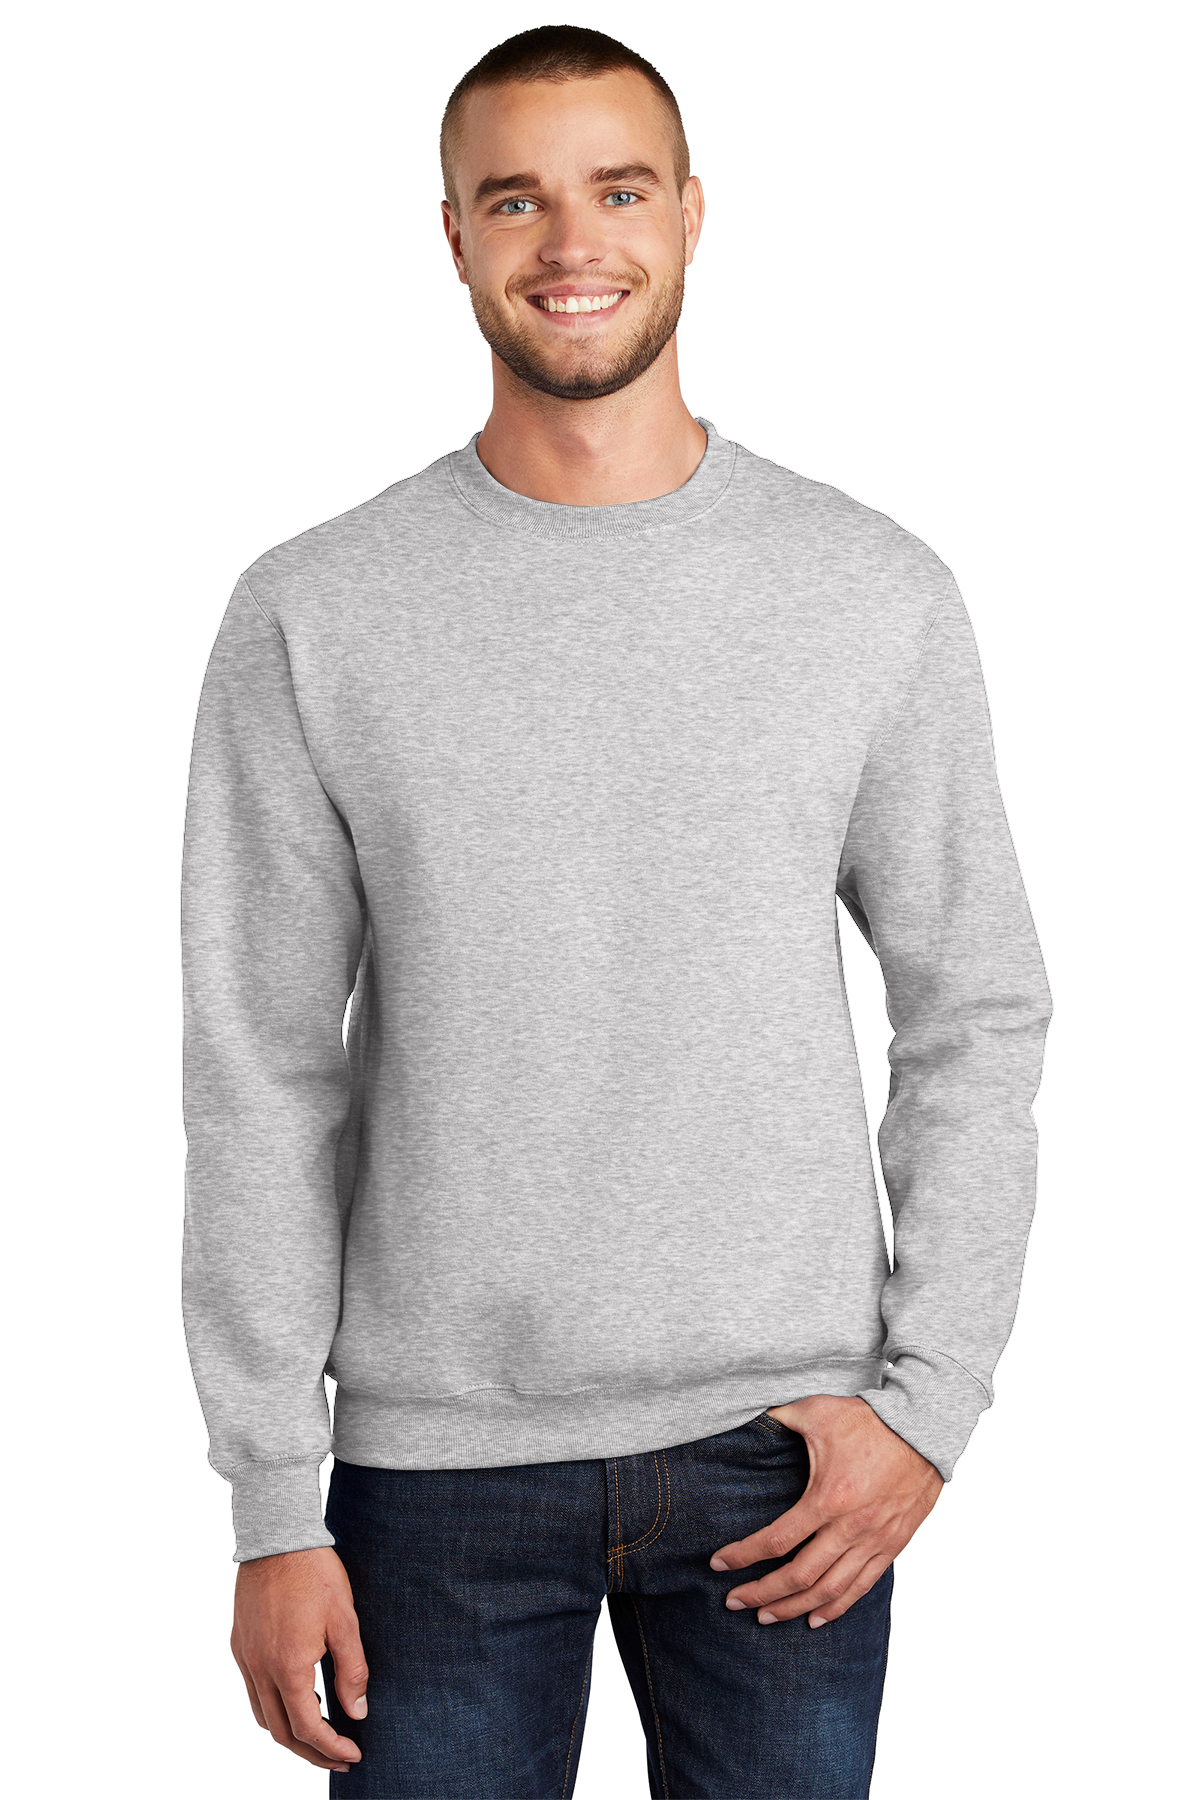 Port & Company ® - Essential Fleece Sweatpant with Pockets